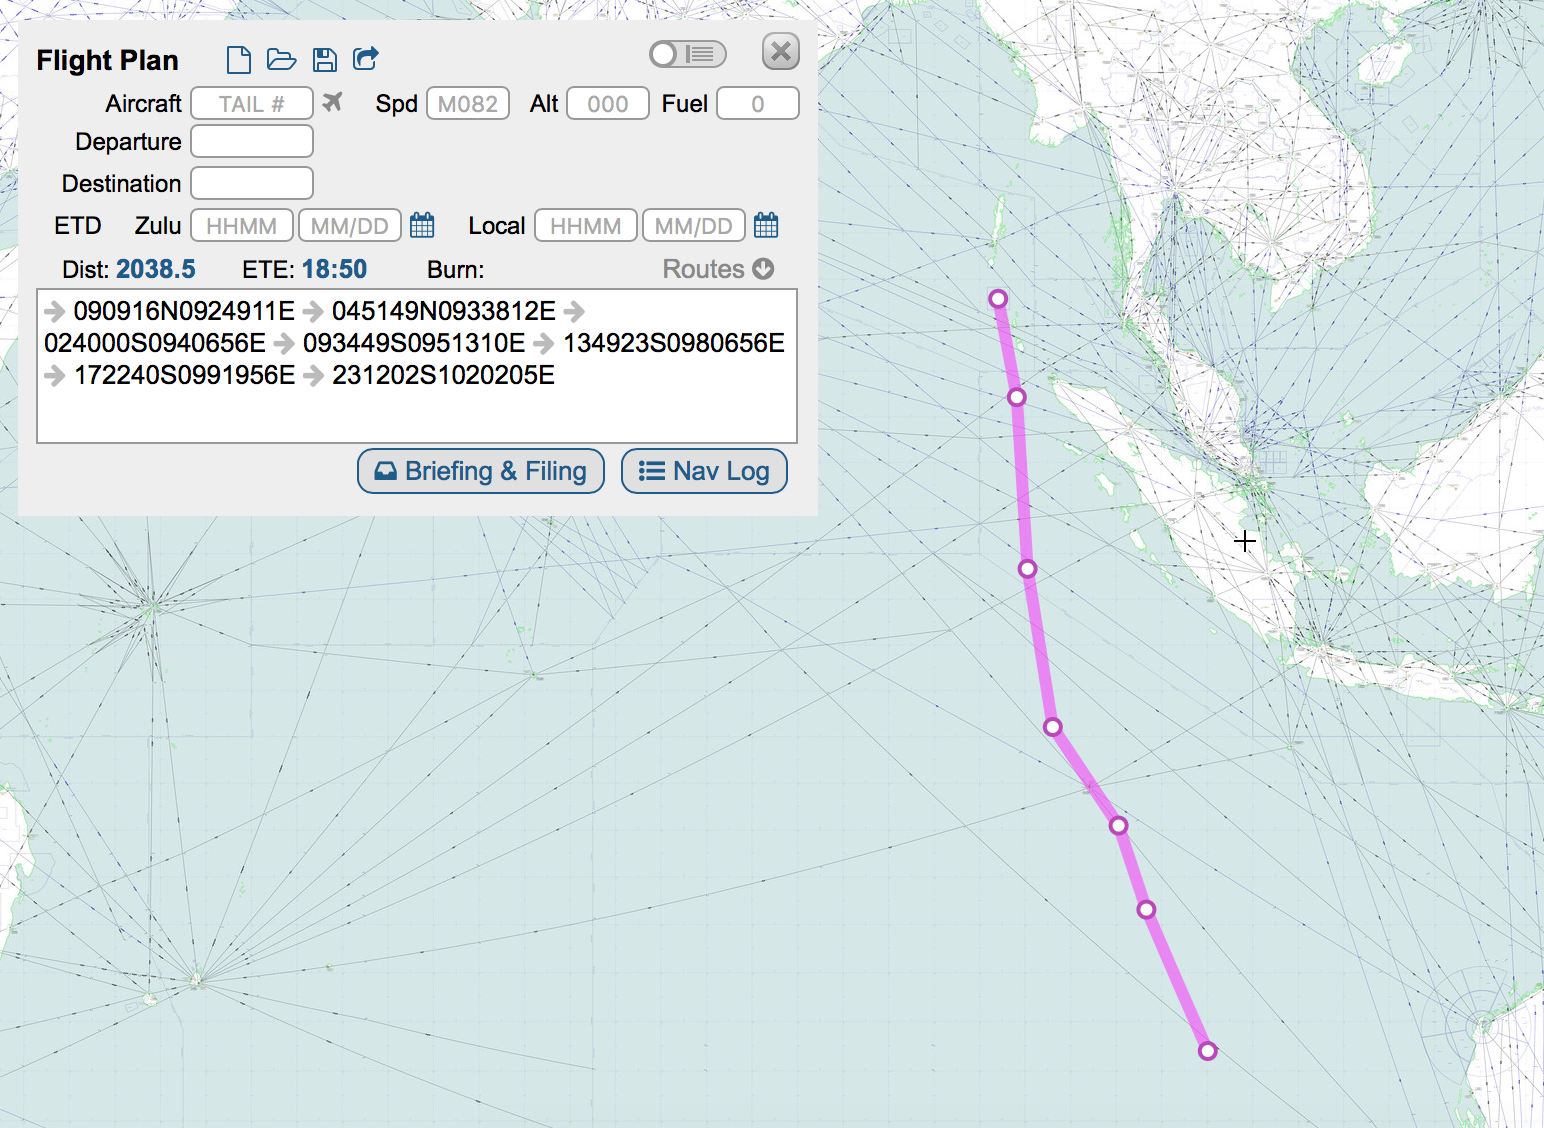 mh370-flight-path-model-fmc-vocx